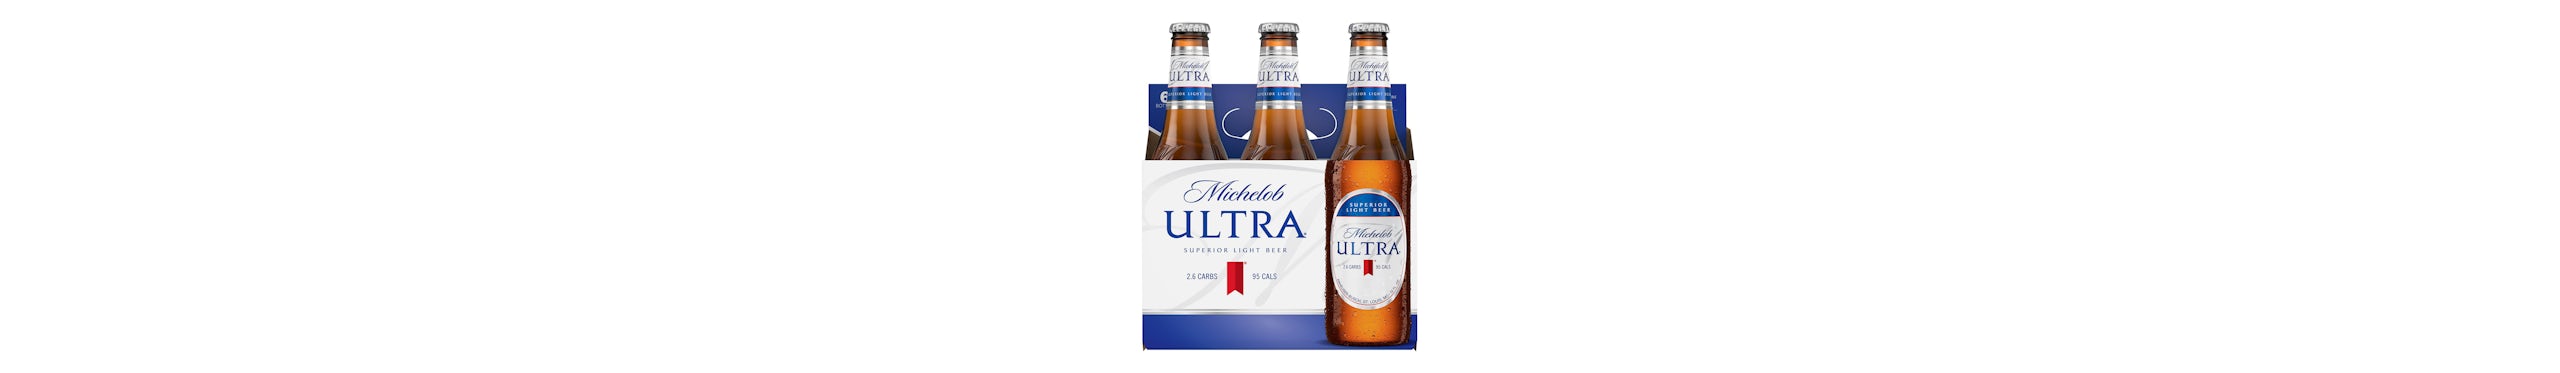 Mich Ultra 6 Pack Bottle